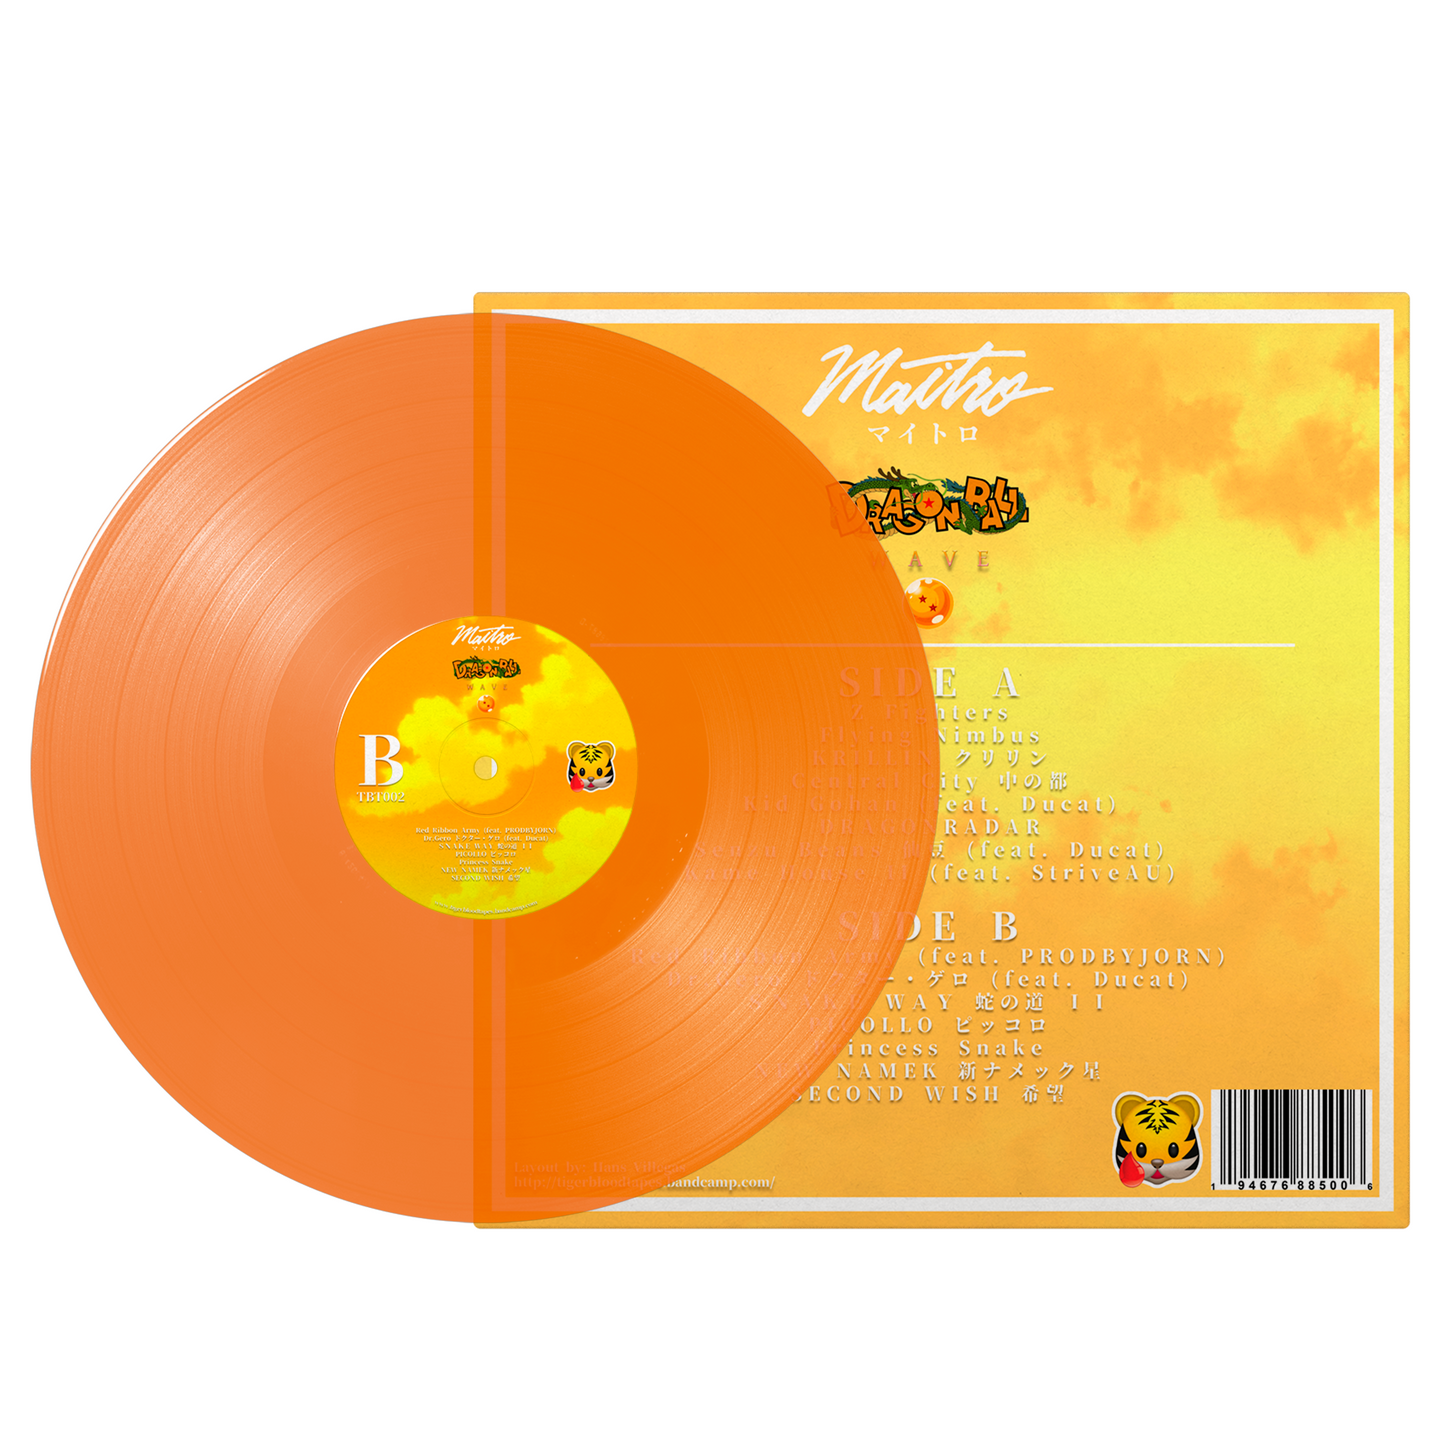 Maitro - "Dragonball Wave II" Limited Edition 12" Orange Vinyl